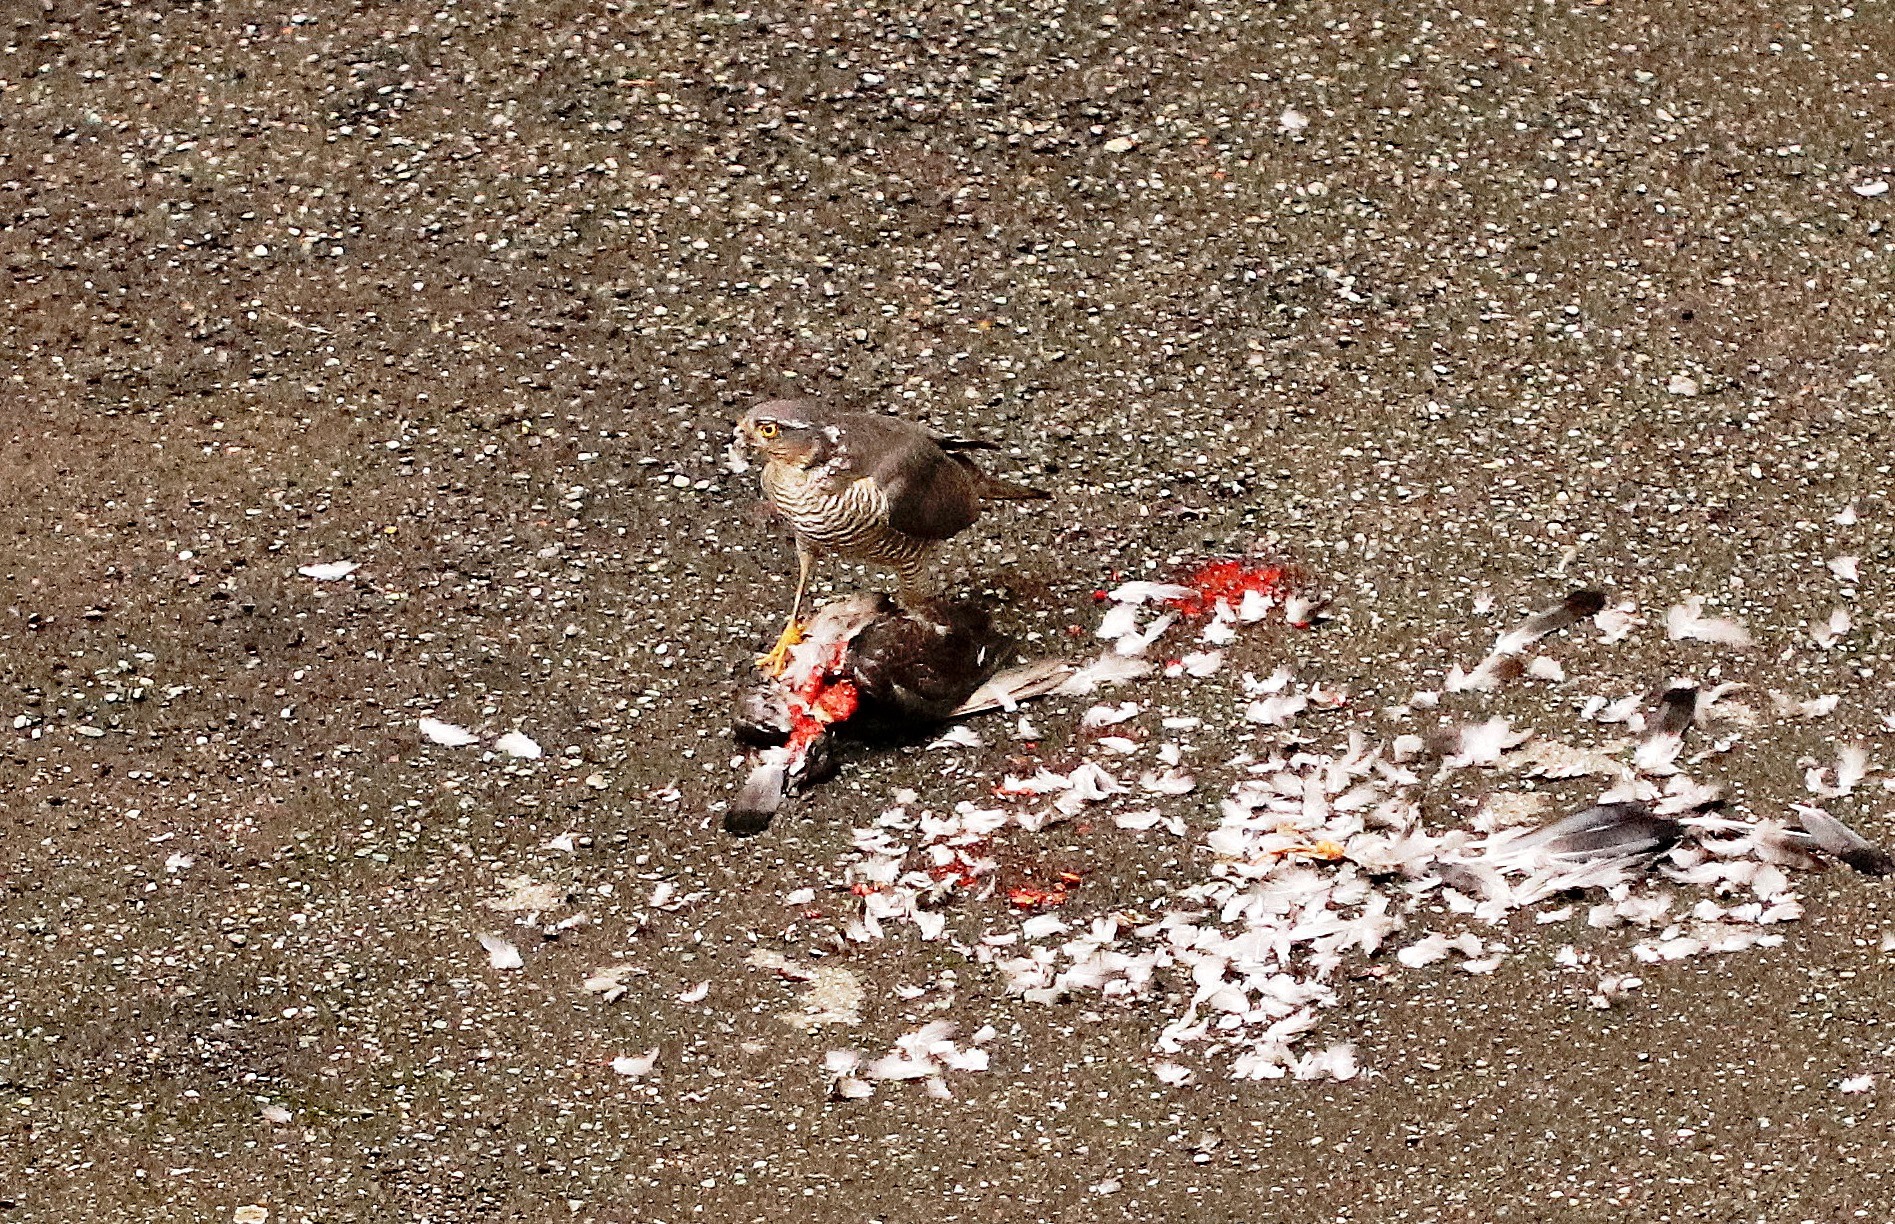 Little goshawk who killed a pigeon...